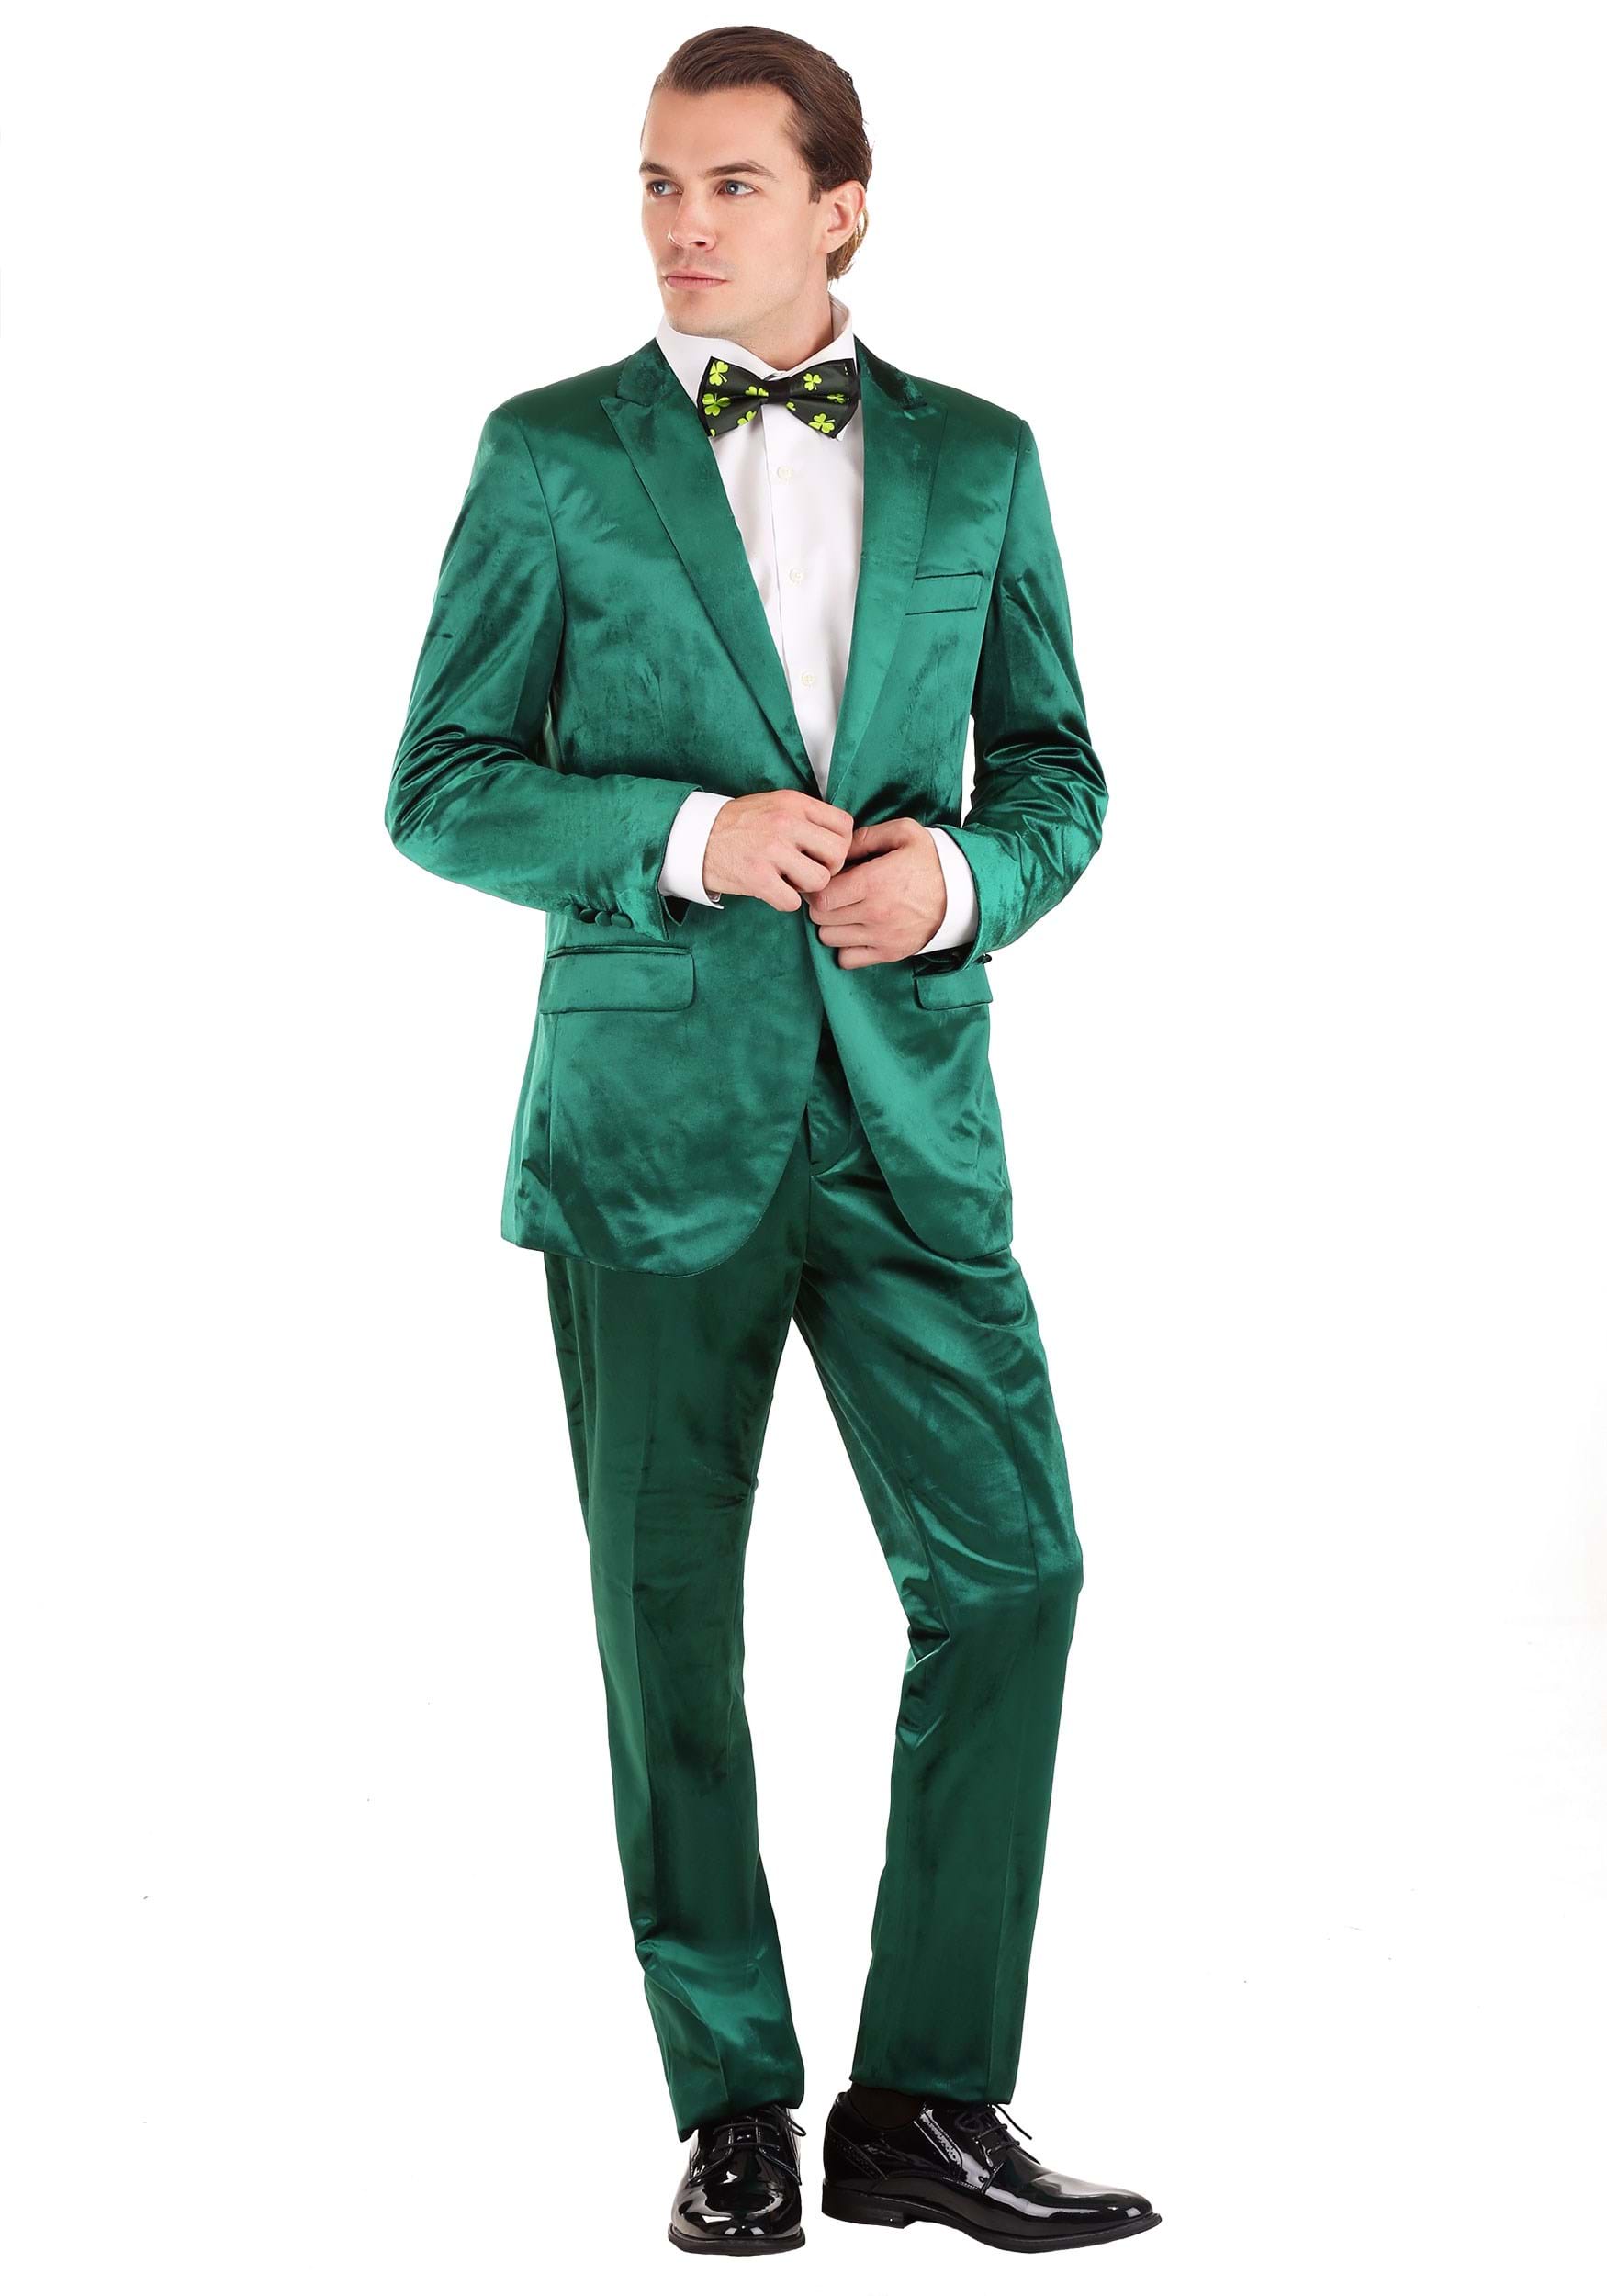 Photos - Fancy Dress FUN Costumes Men's Green Leprechaun Suit Costume - St. Patrick's Day Green